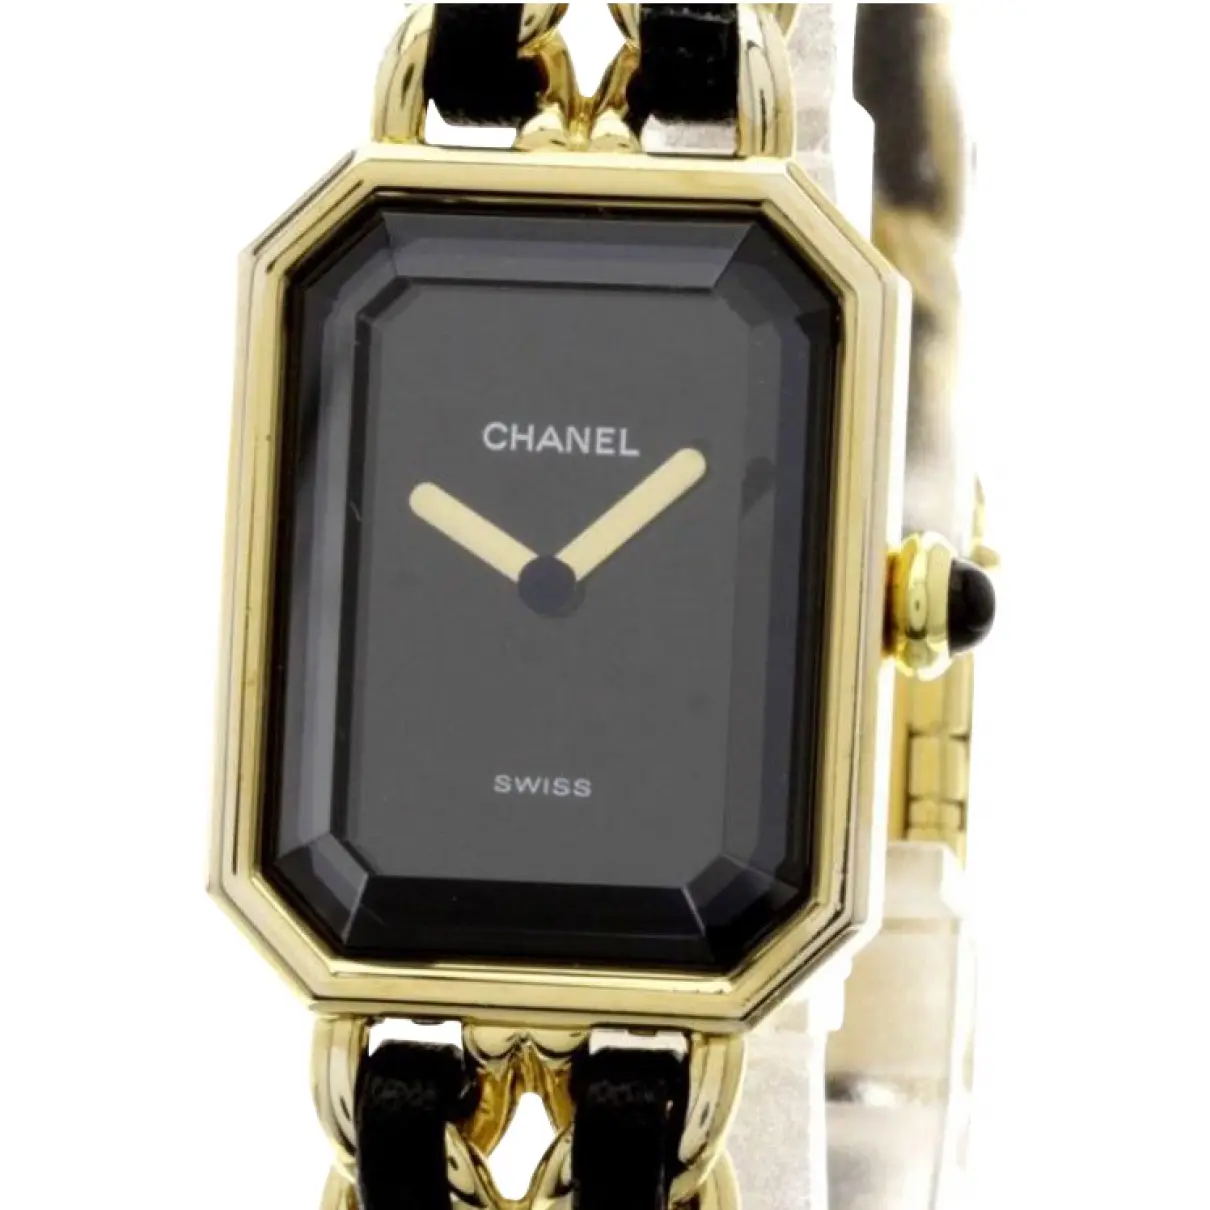 Chanel watch Chanel